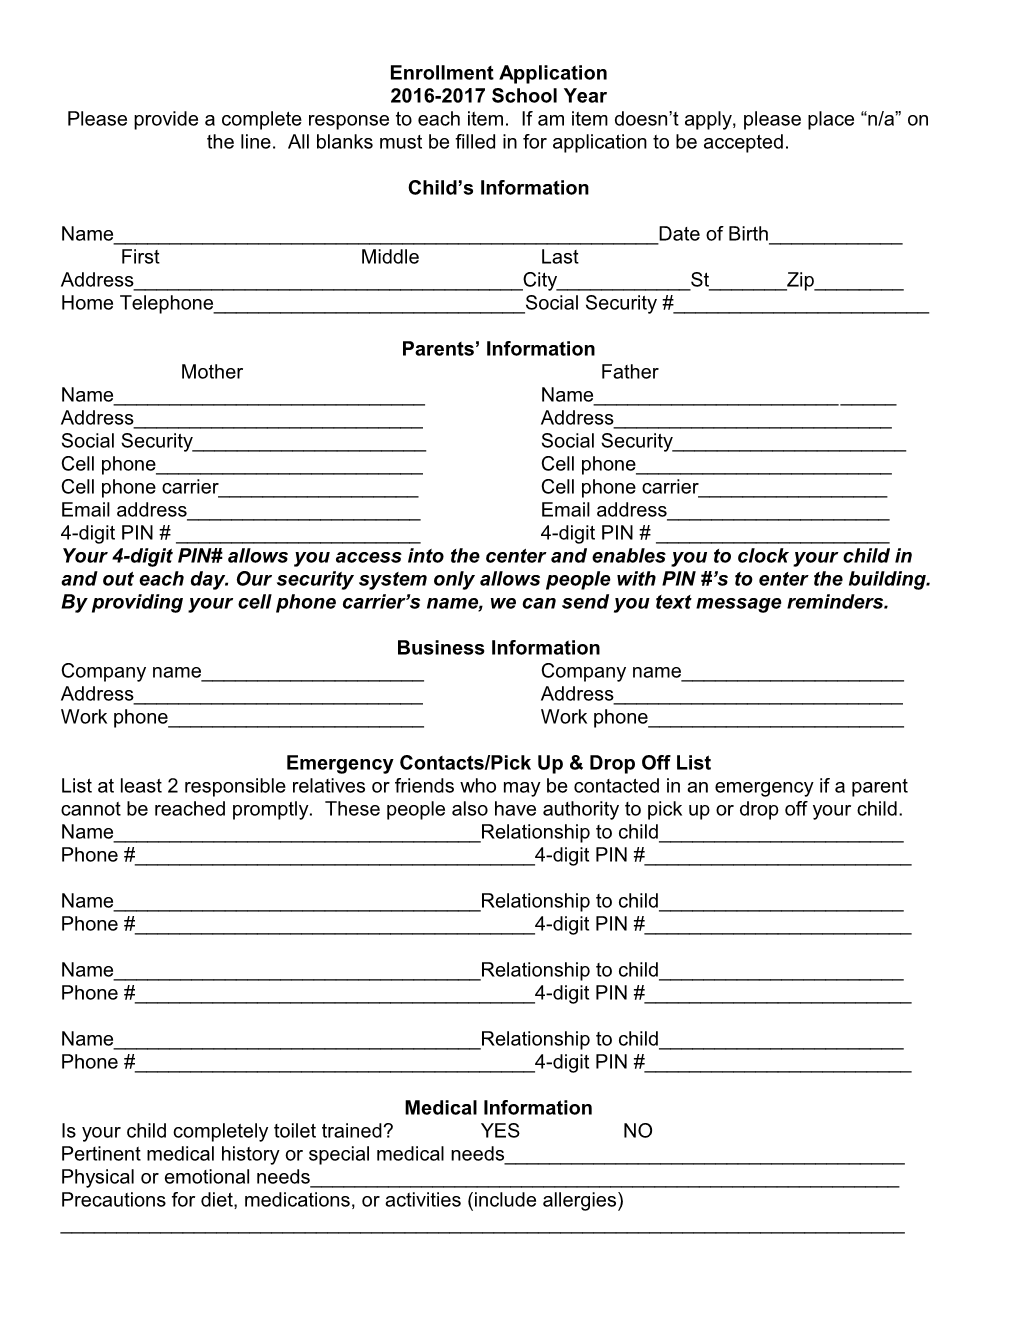 Application for Enrollment s1